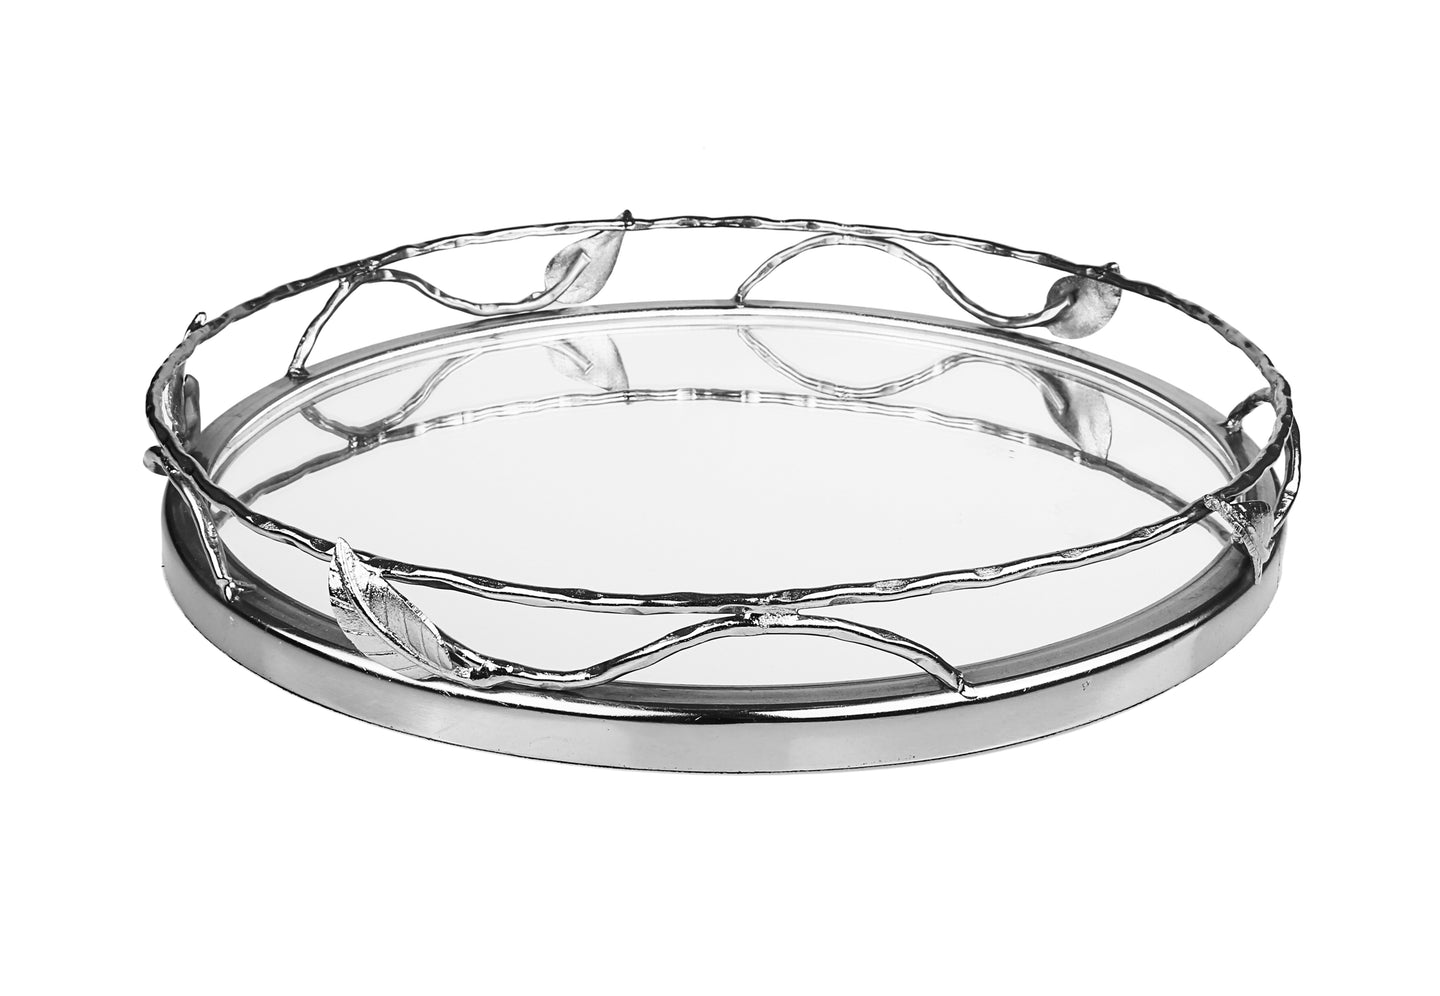 Round Mirror Tray With Nickel Leaf Design - 11.25